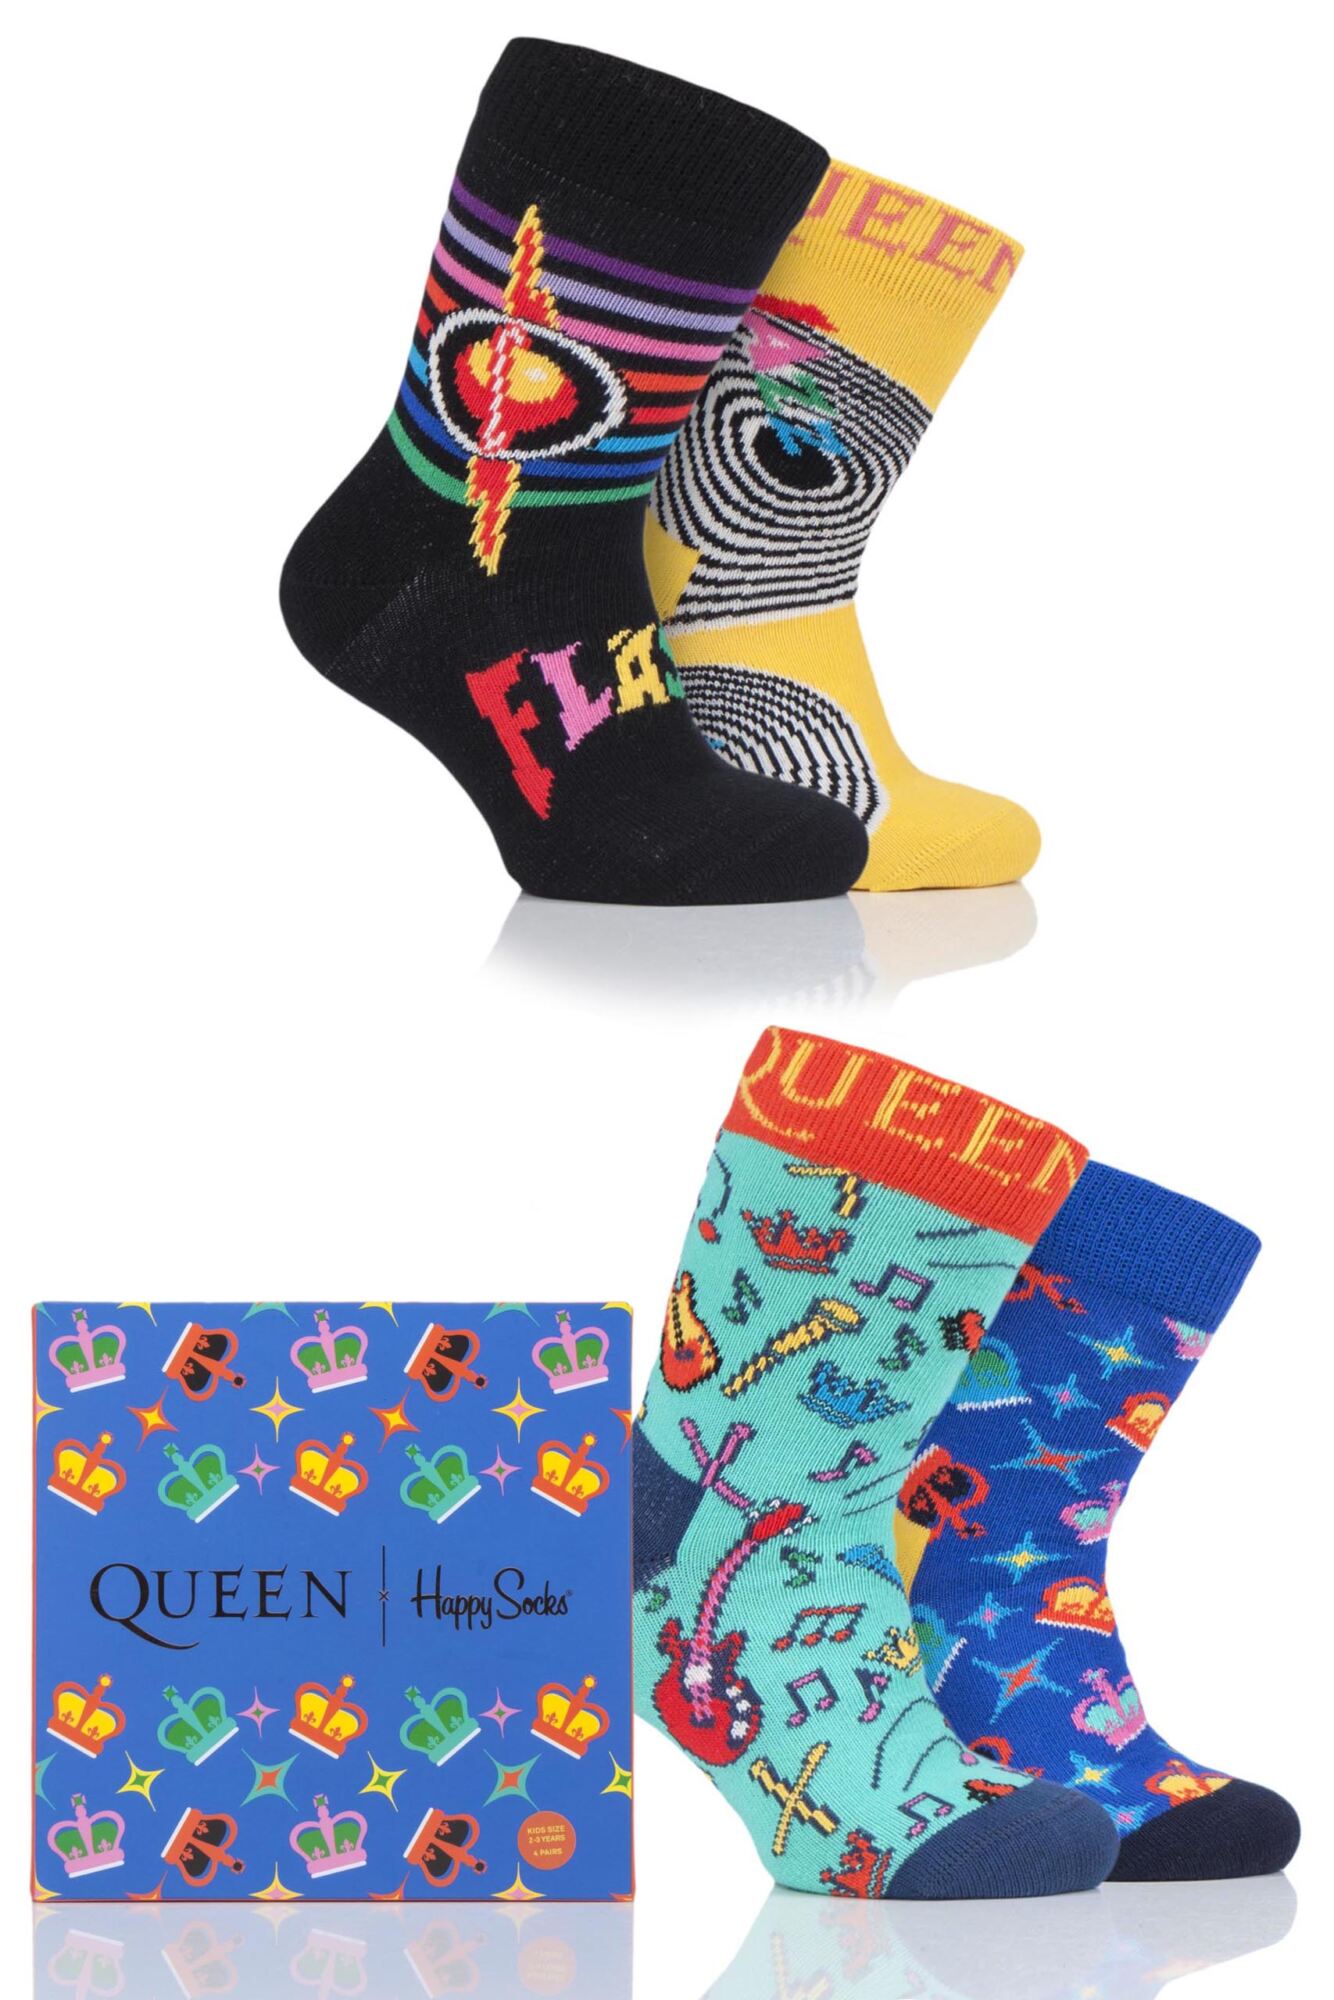 4 Pair Queen 'We Will Sock You' Gift Boxed Socks Kids Unisex - Happy Socks